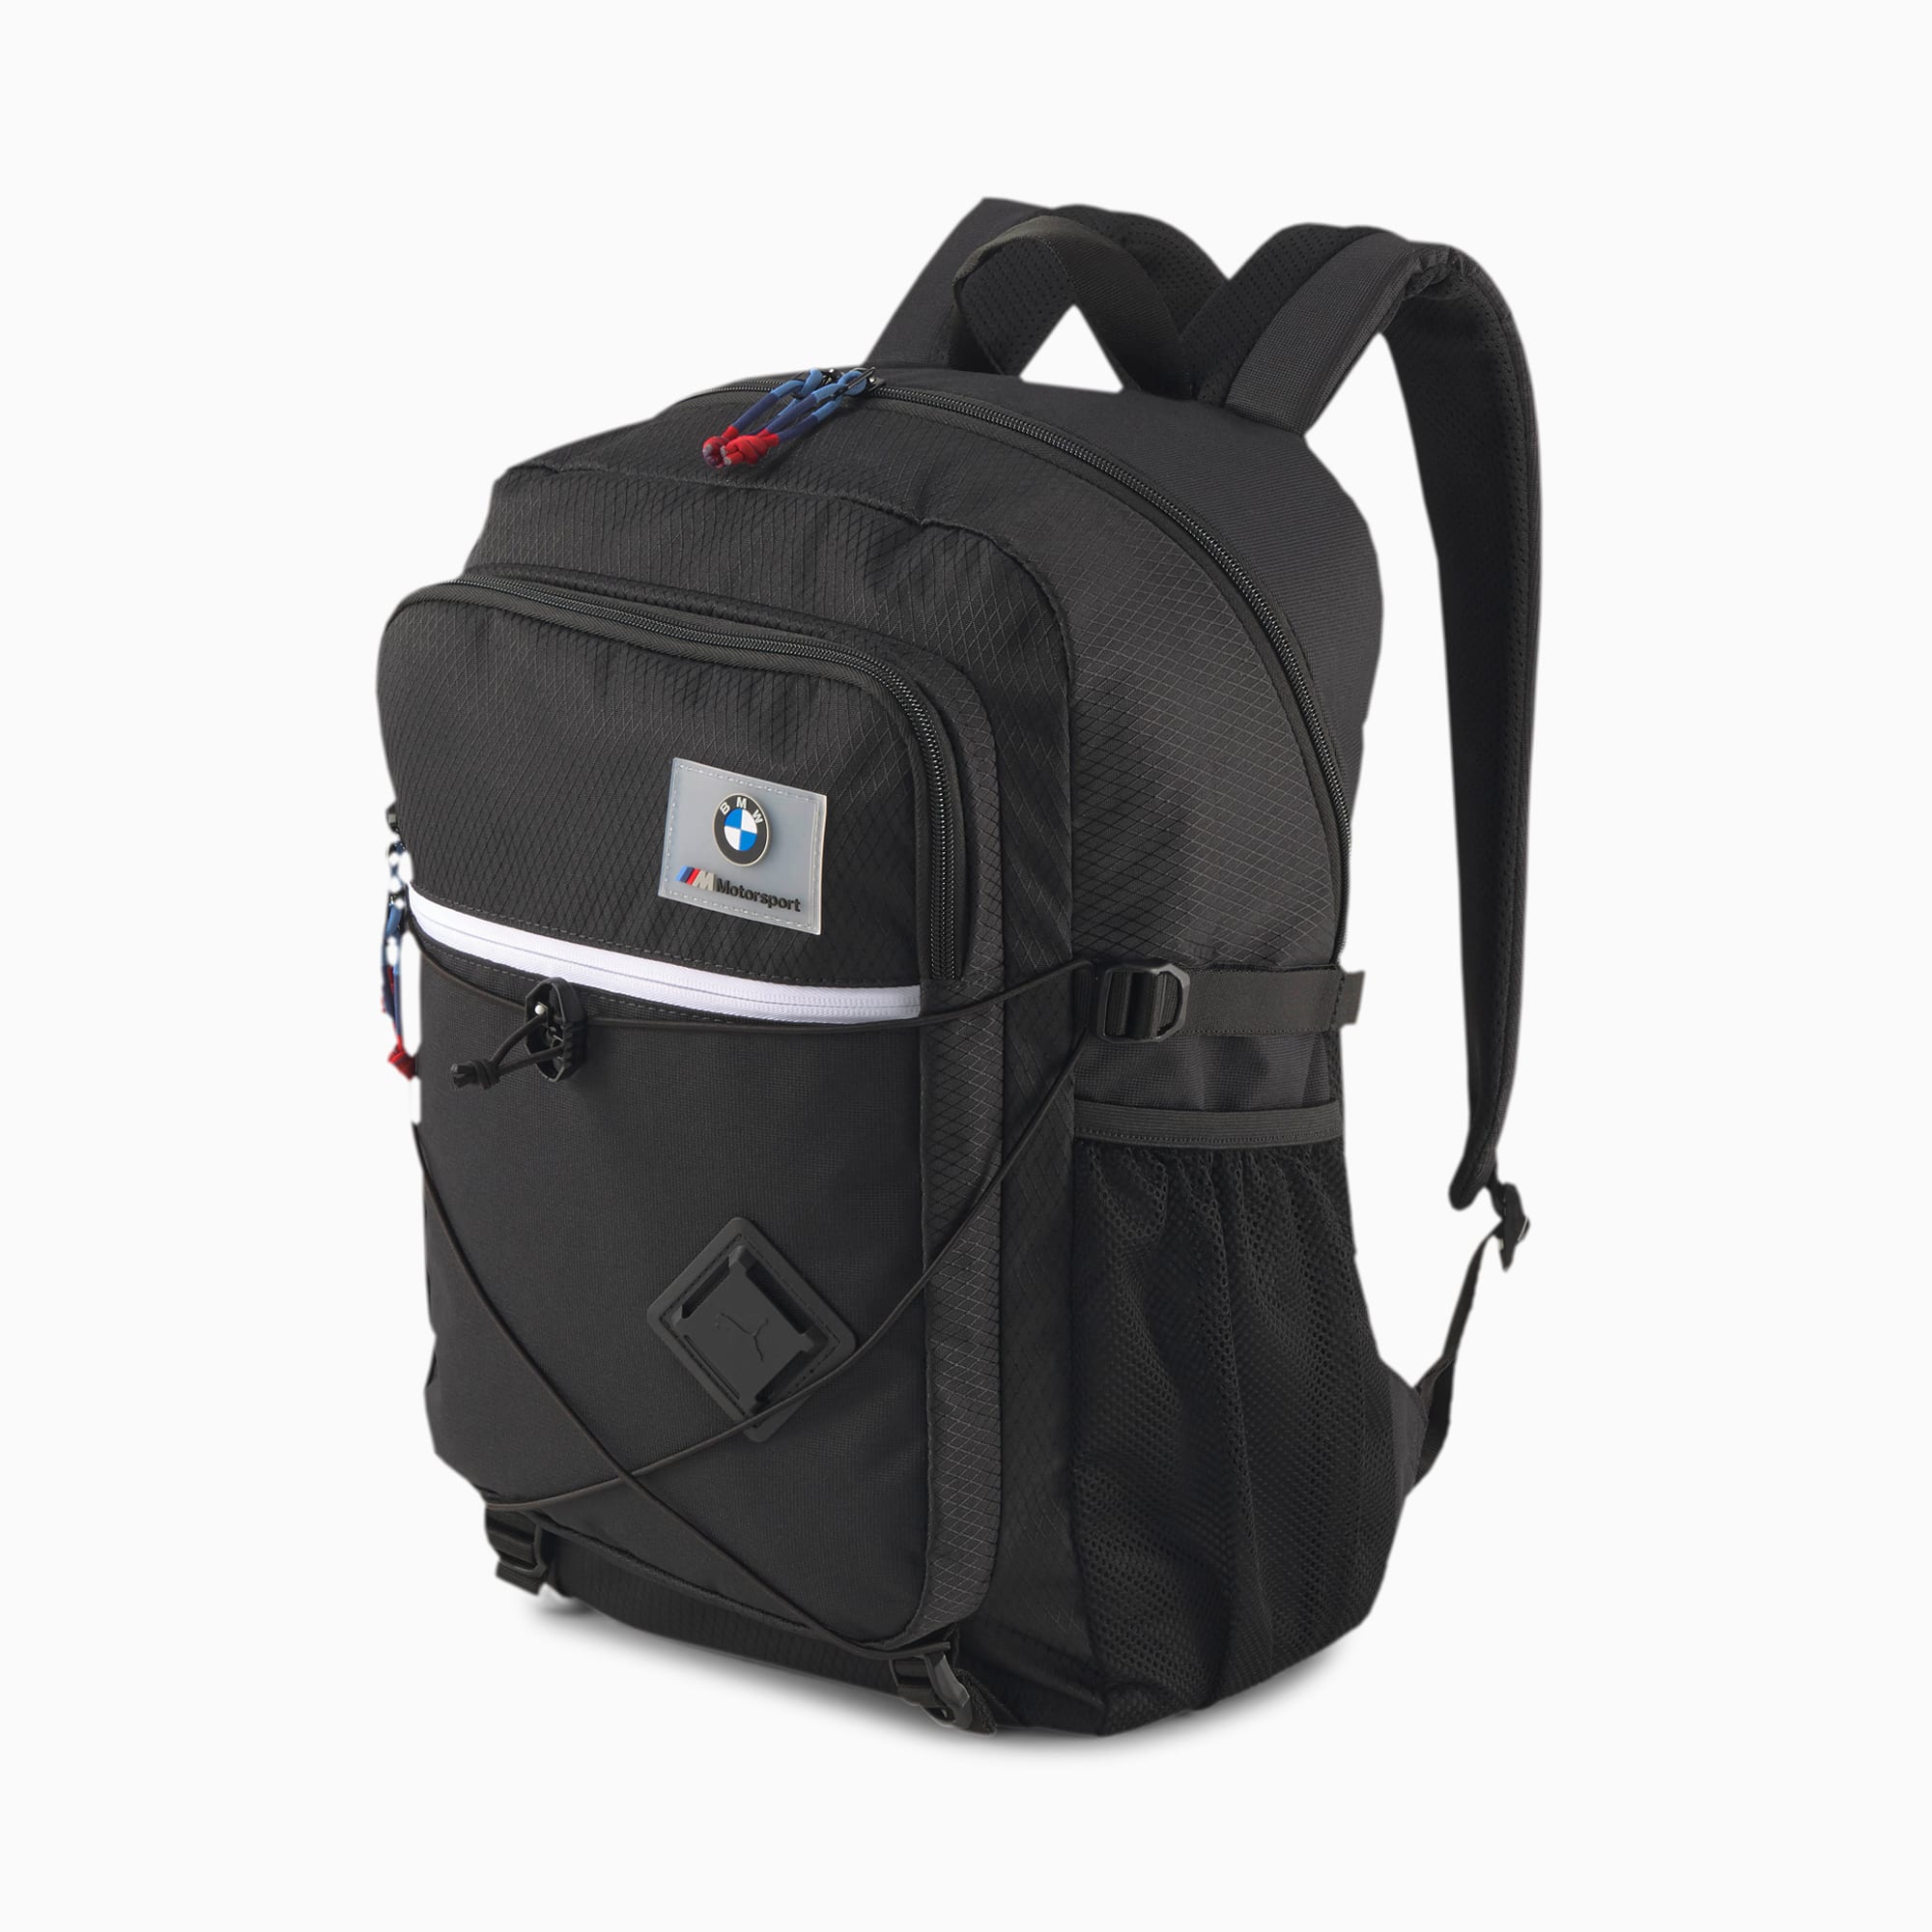 buy puma bmw backpack